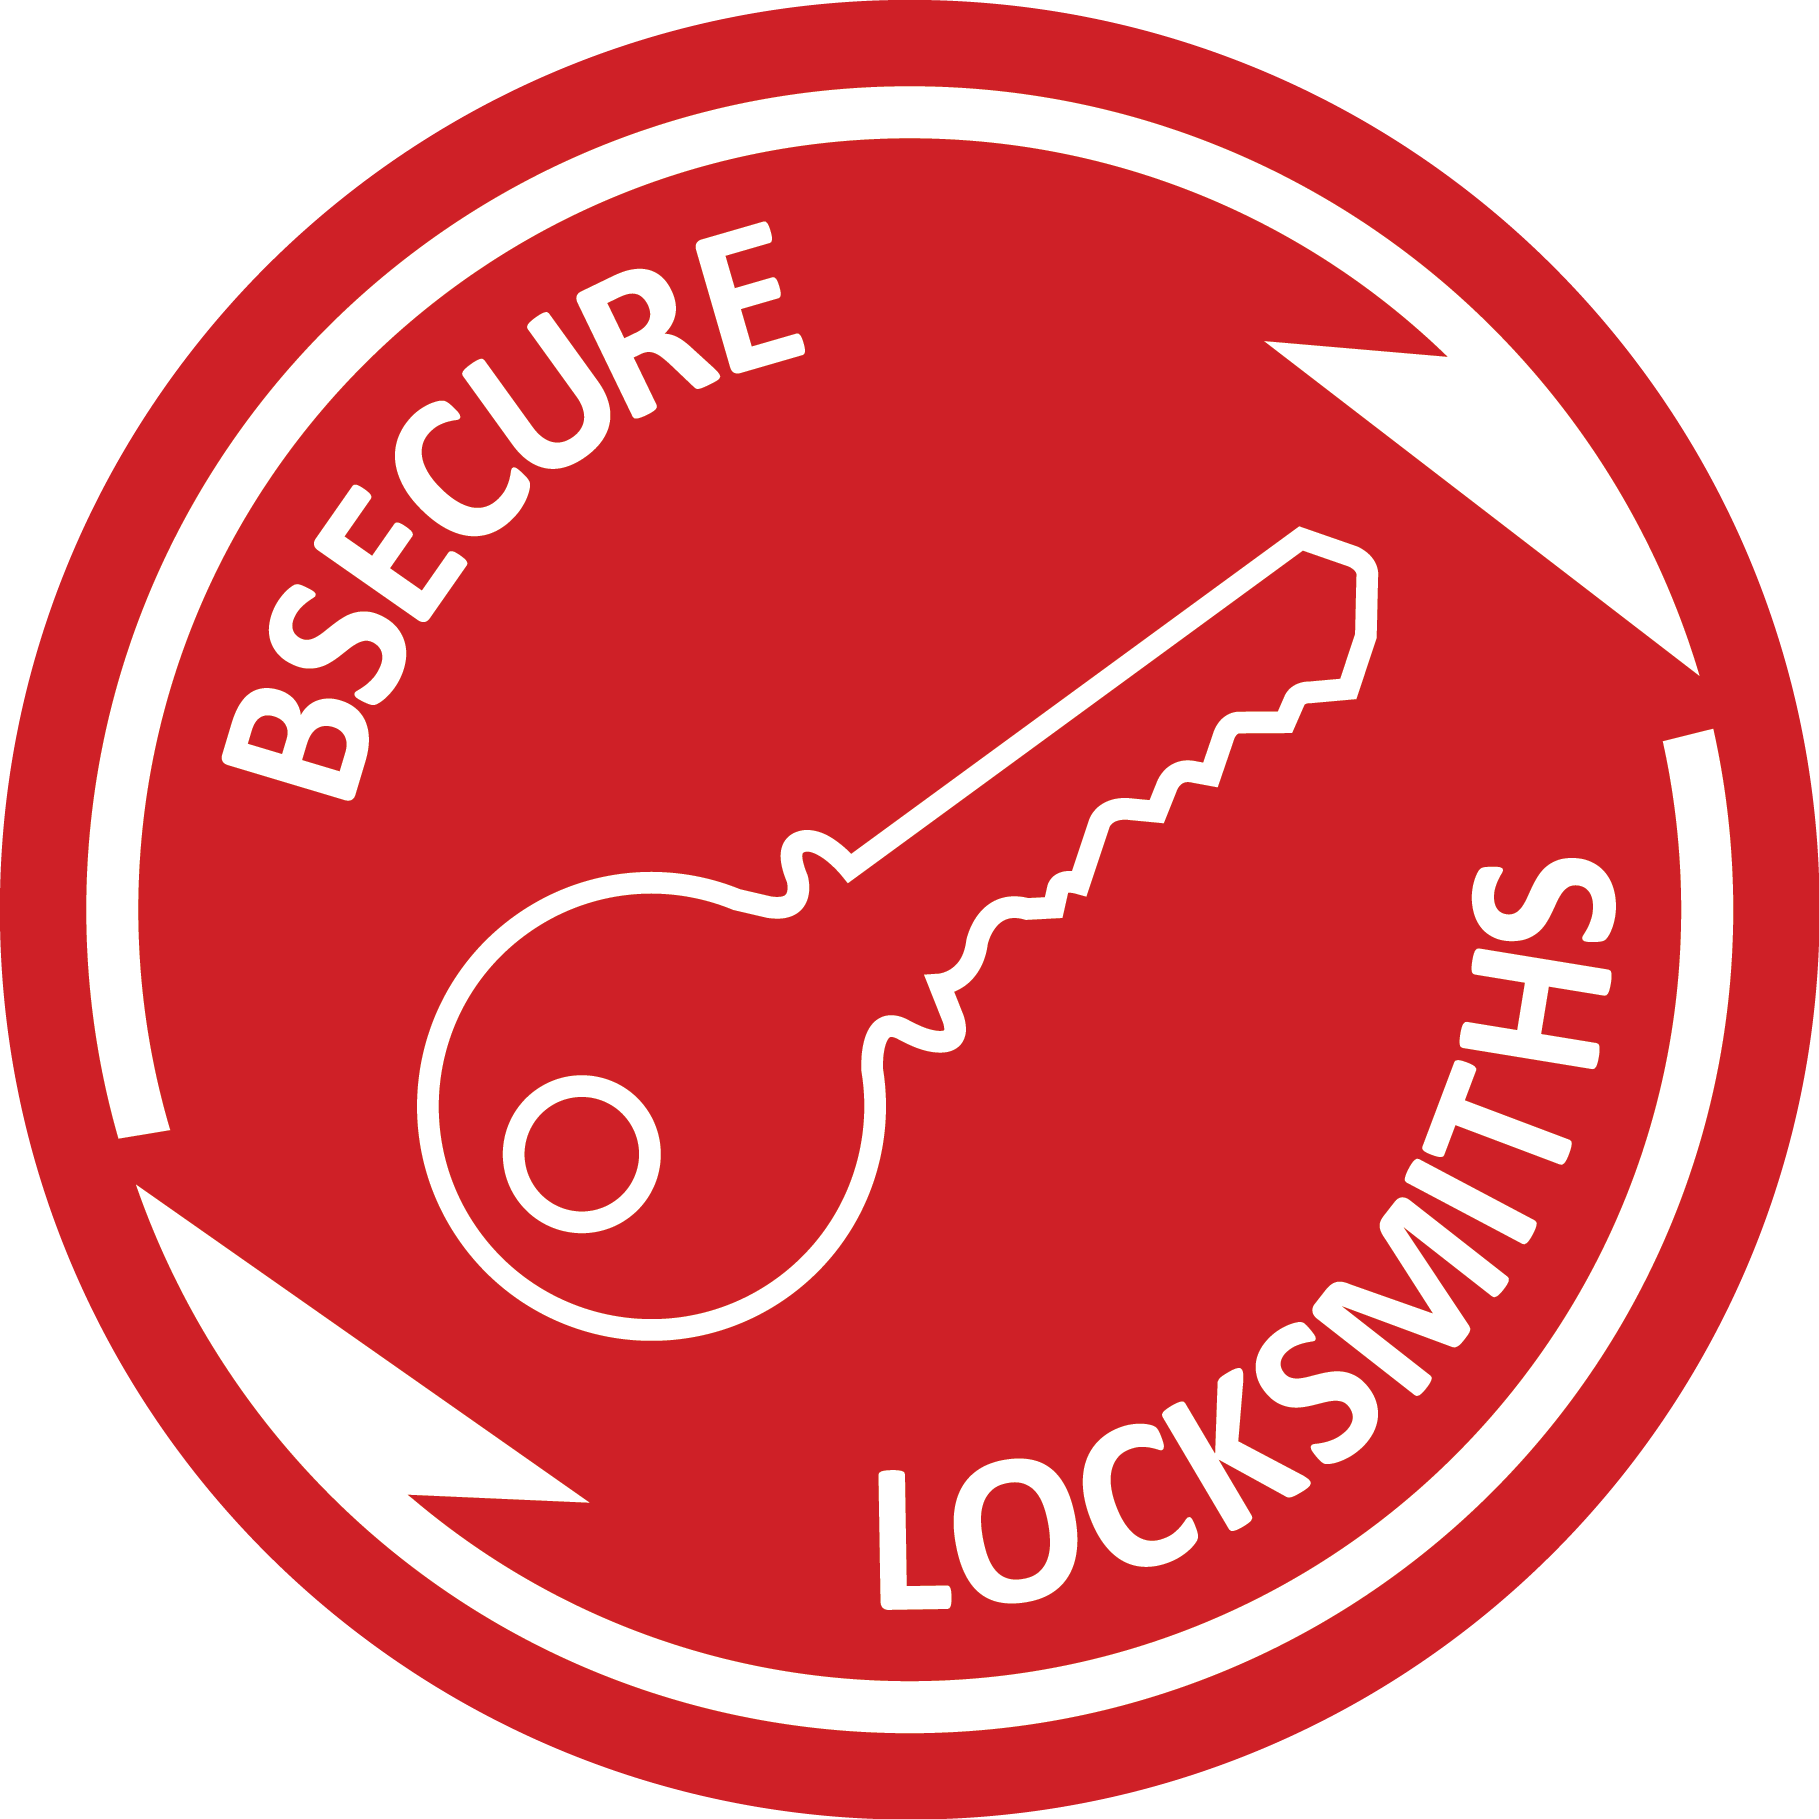 Bsecure Locksmiths of Stamford